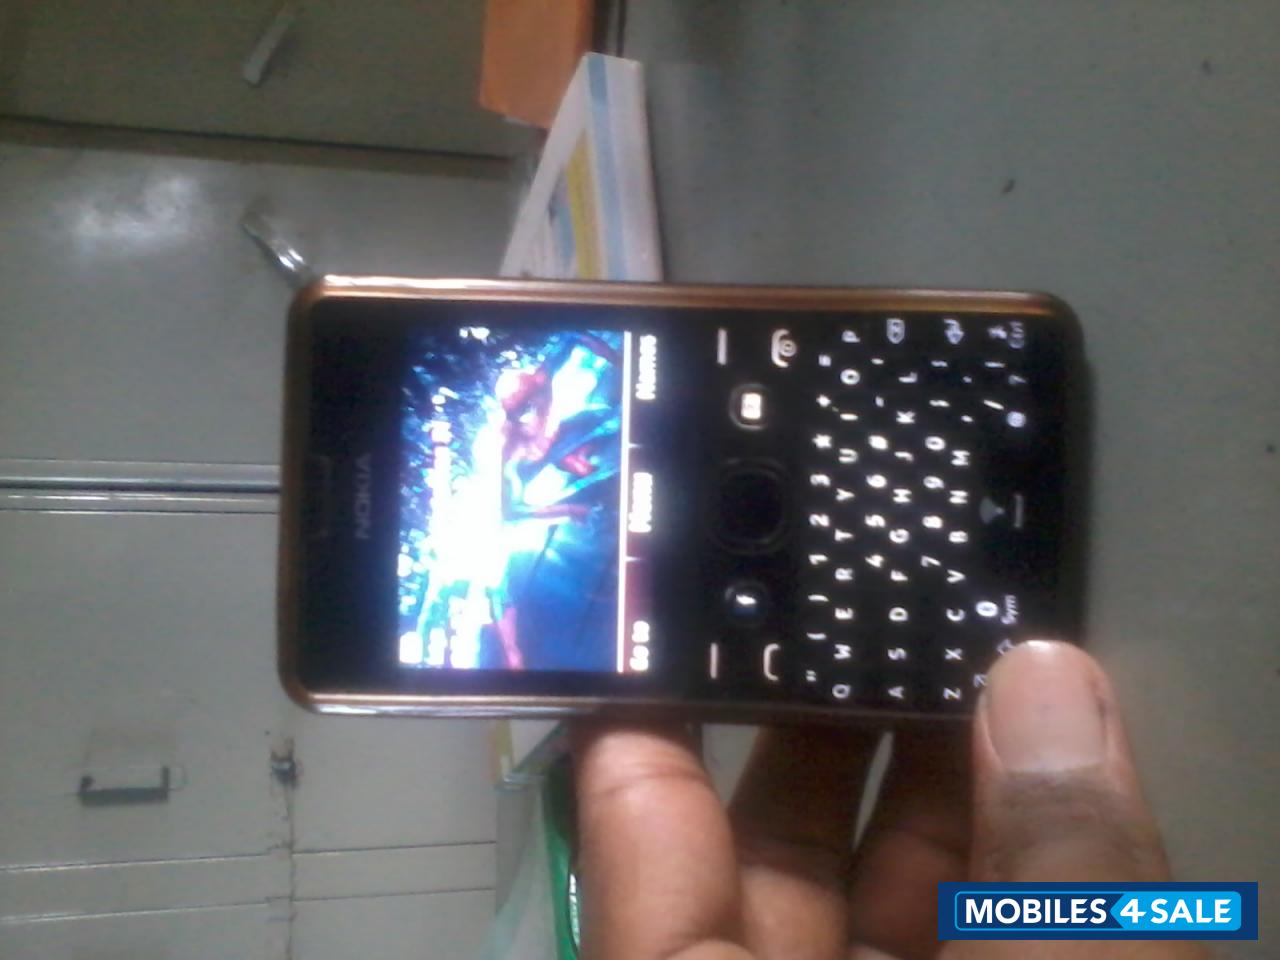 Black Nokia Asha 210